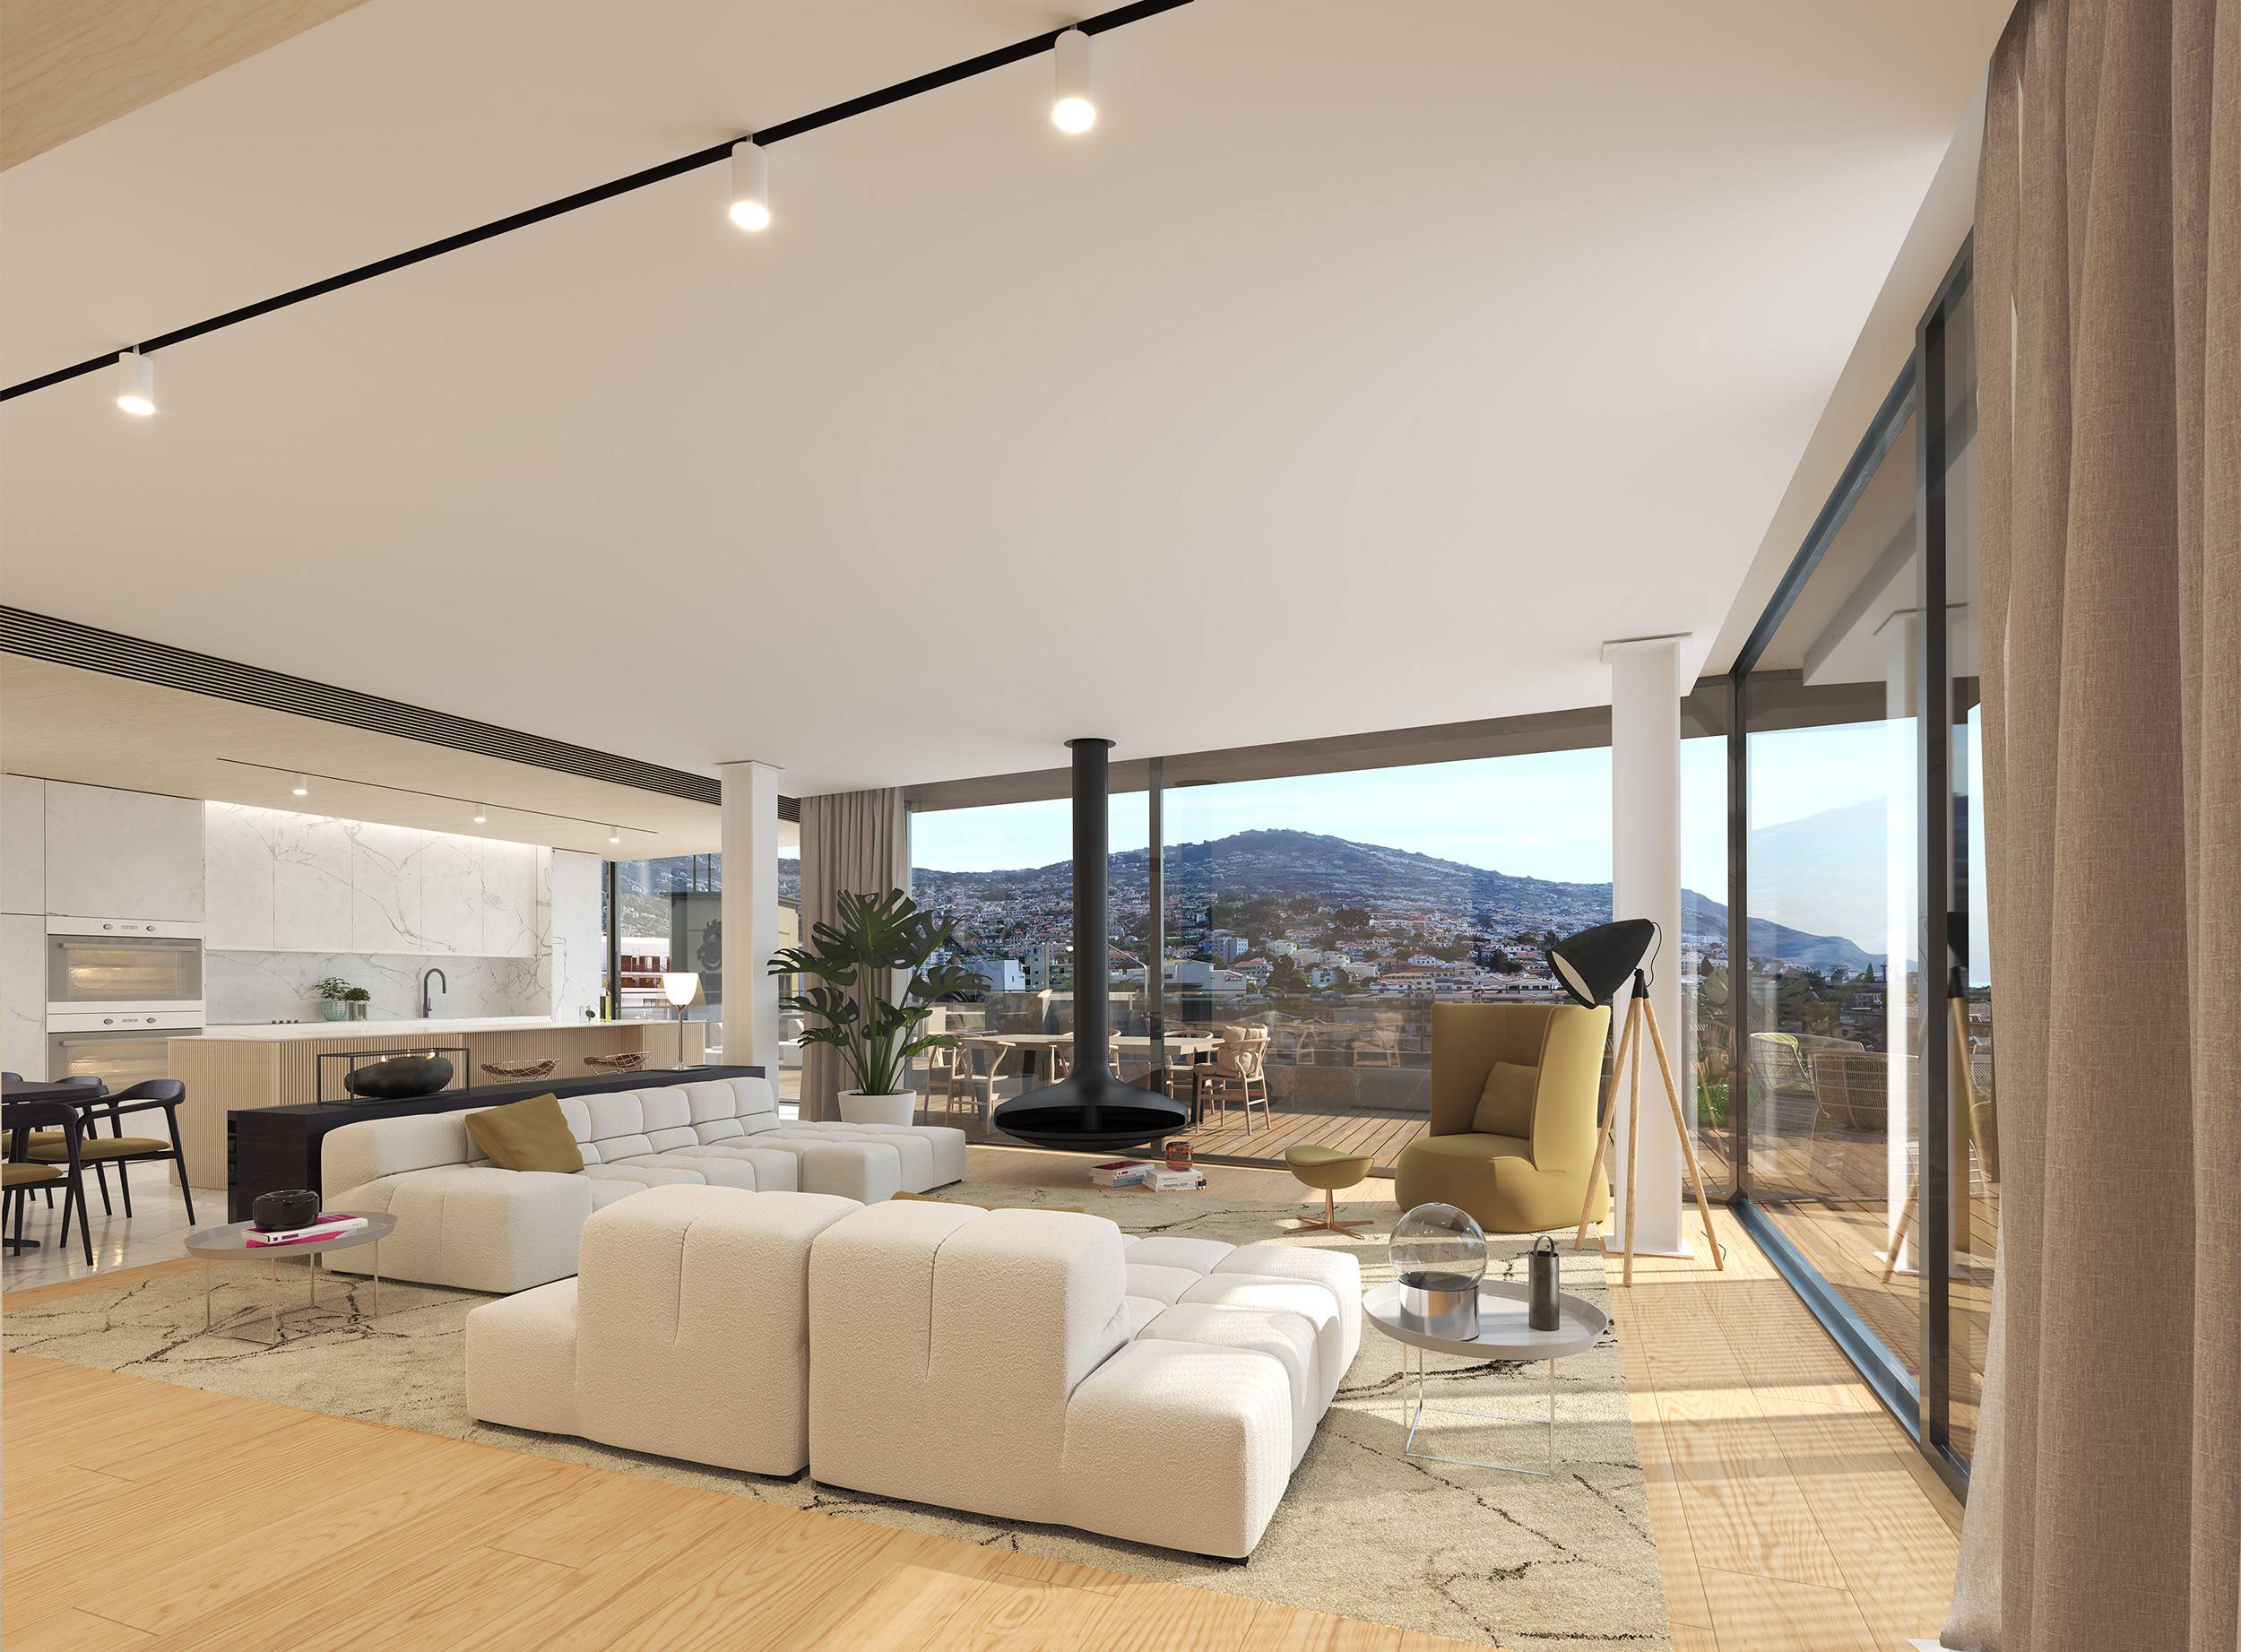 Savoy Monumentalis - Luxury T3 Apartments- Funchal - Madeira Island